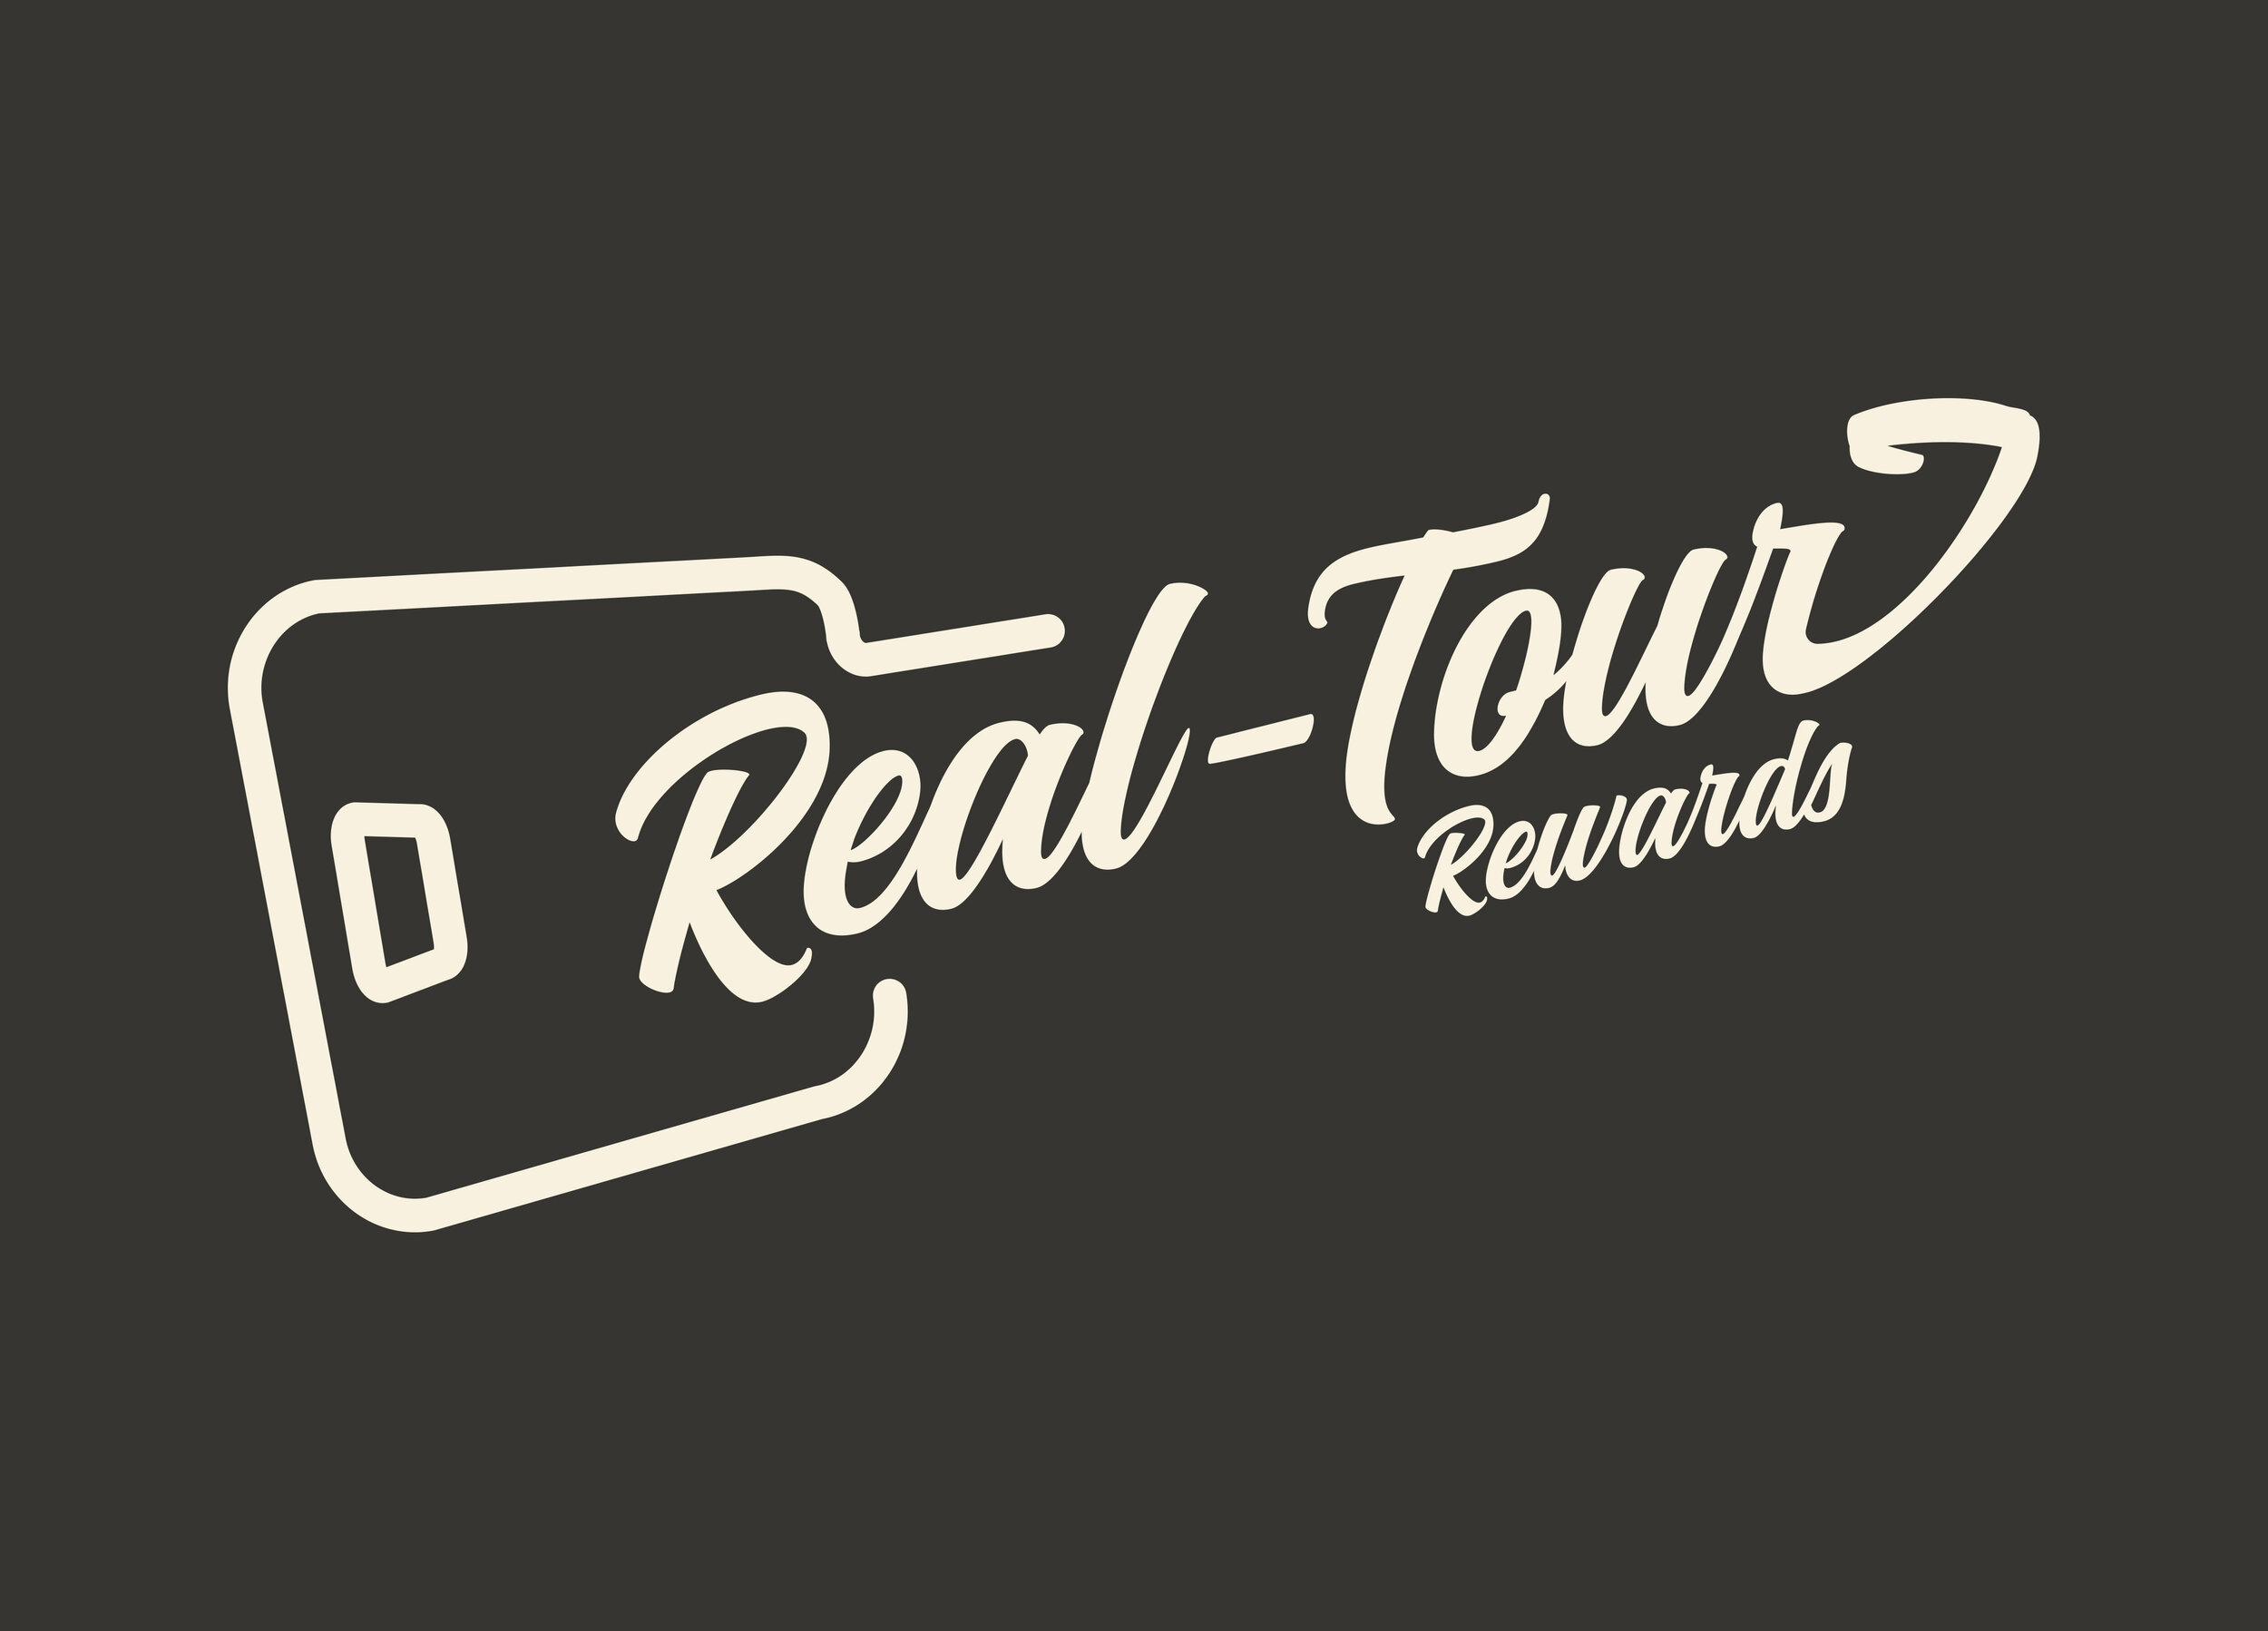 Logos-RealTourRewards.jpg